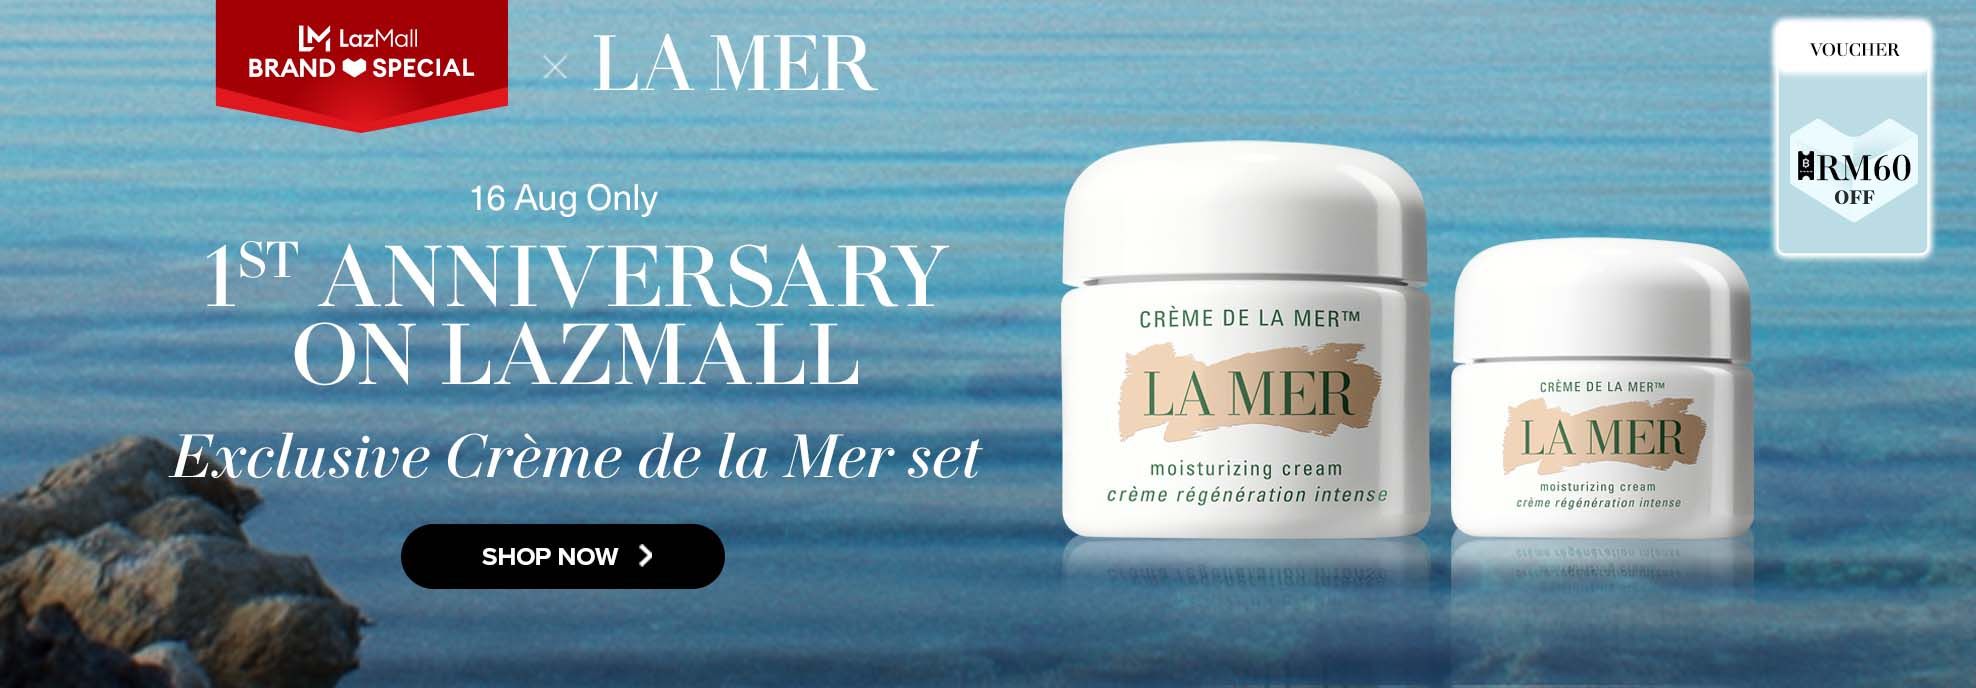 2AM-11AM : La Mer Brand Special